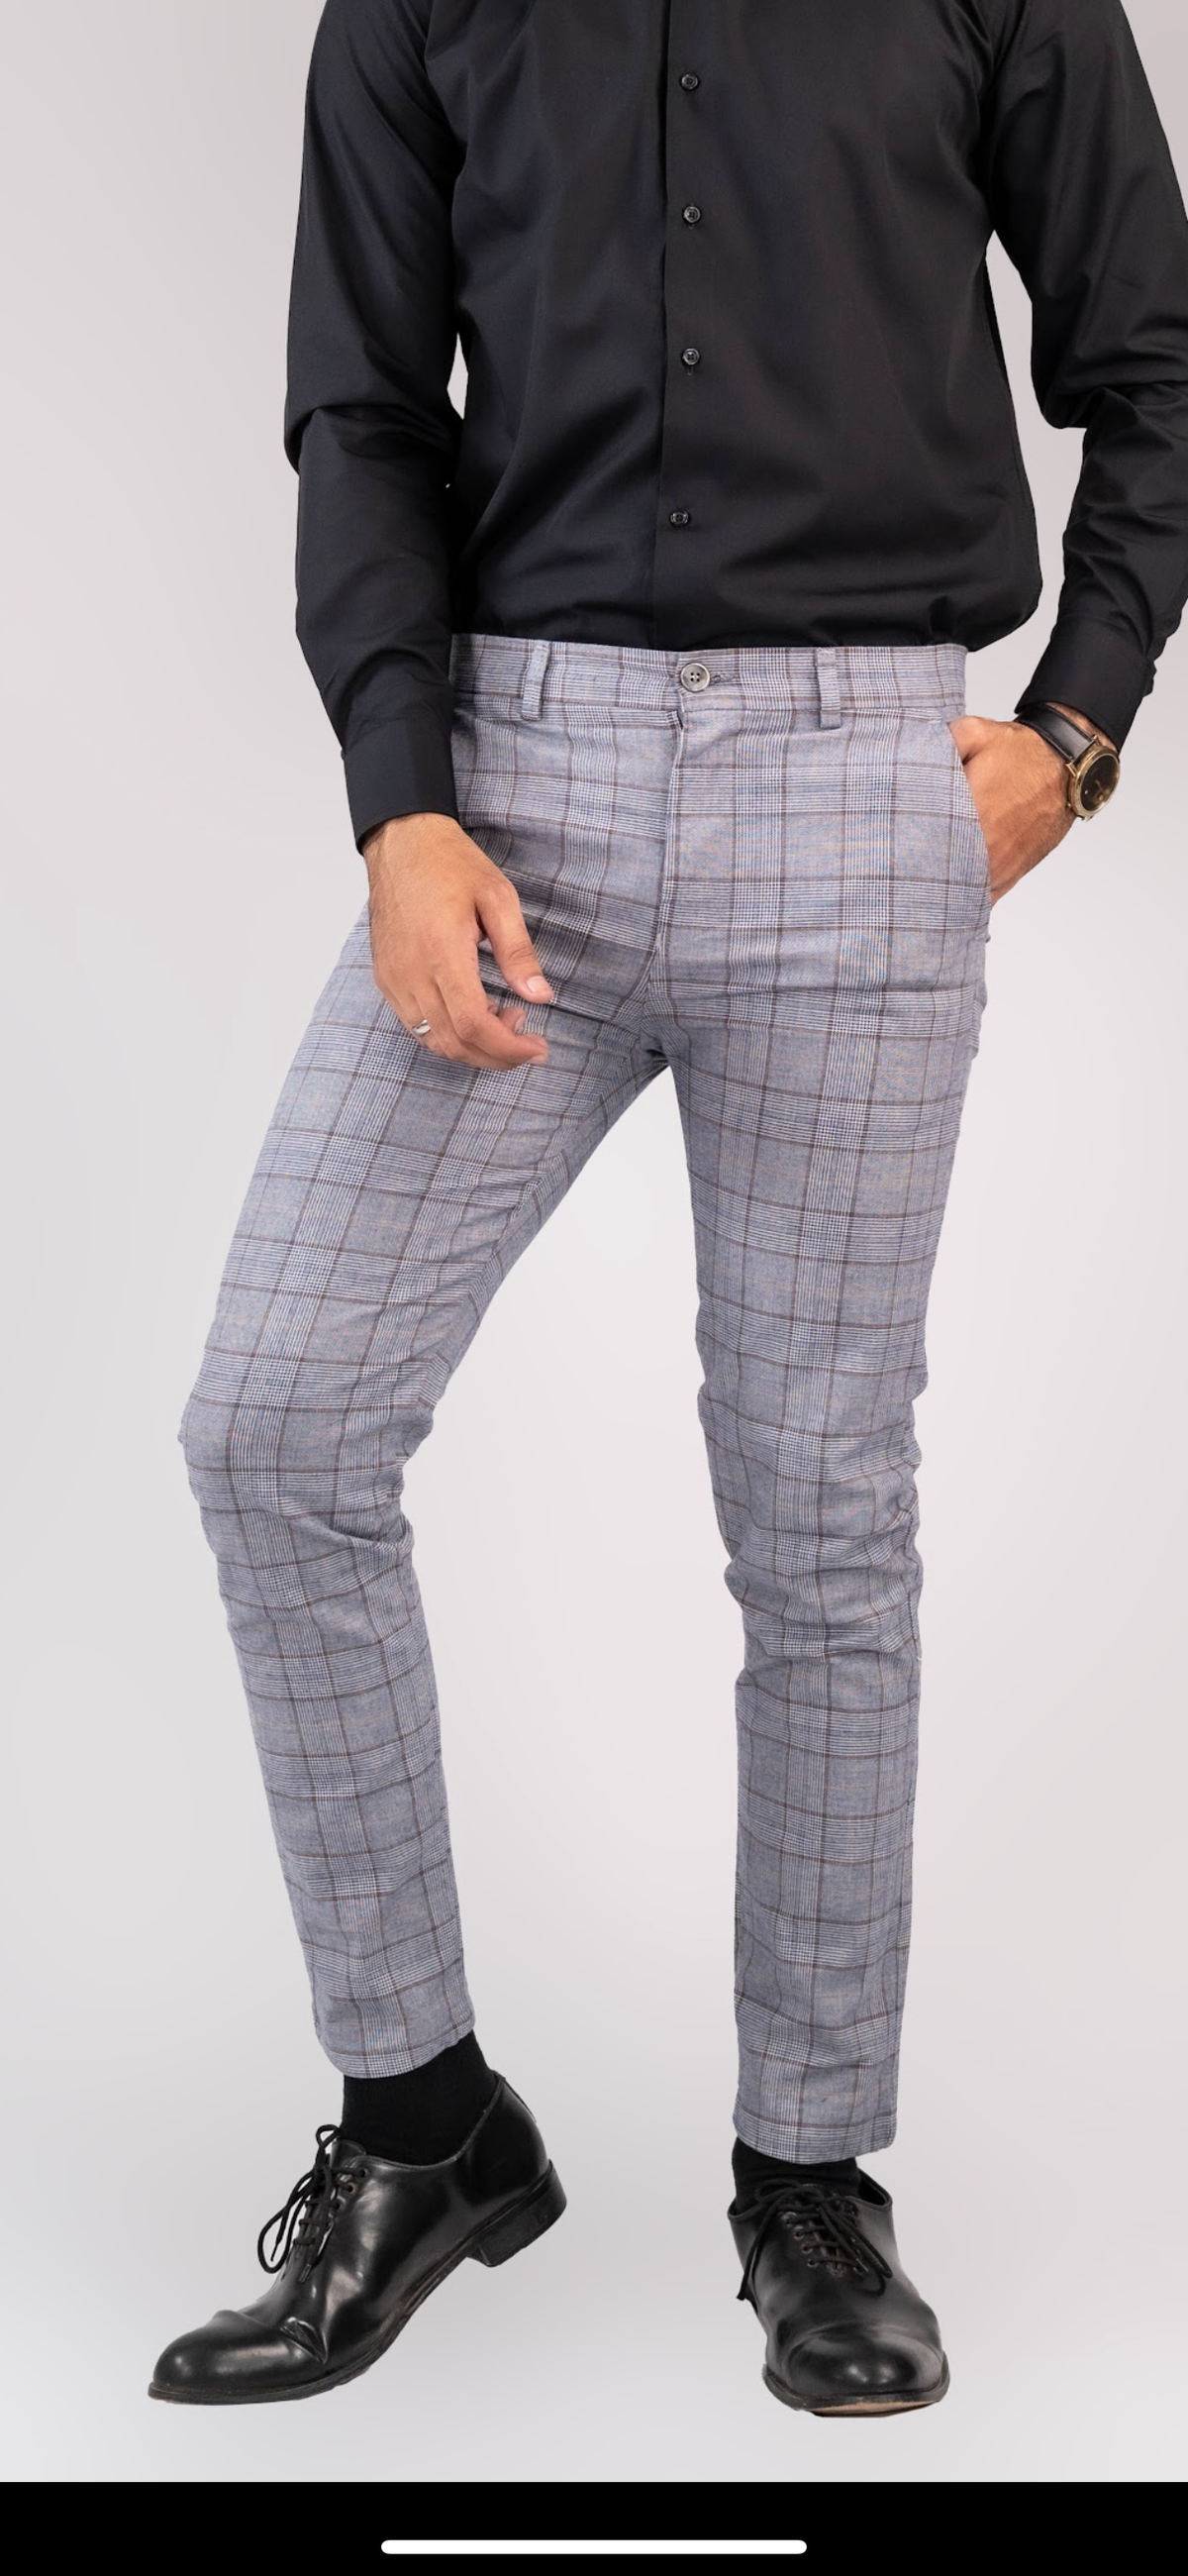 Grey Check Slim Cotton Chino Trousers